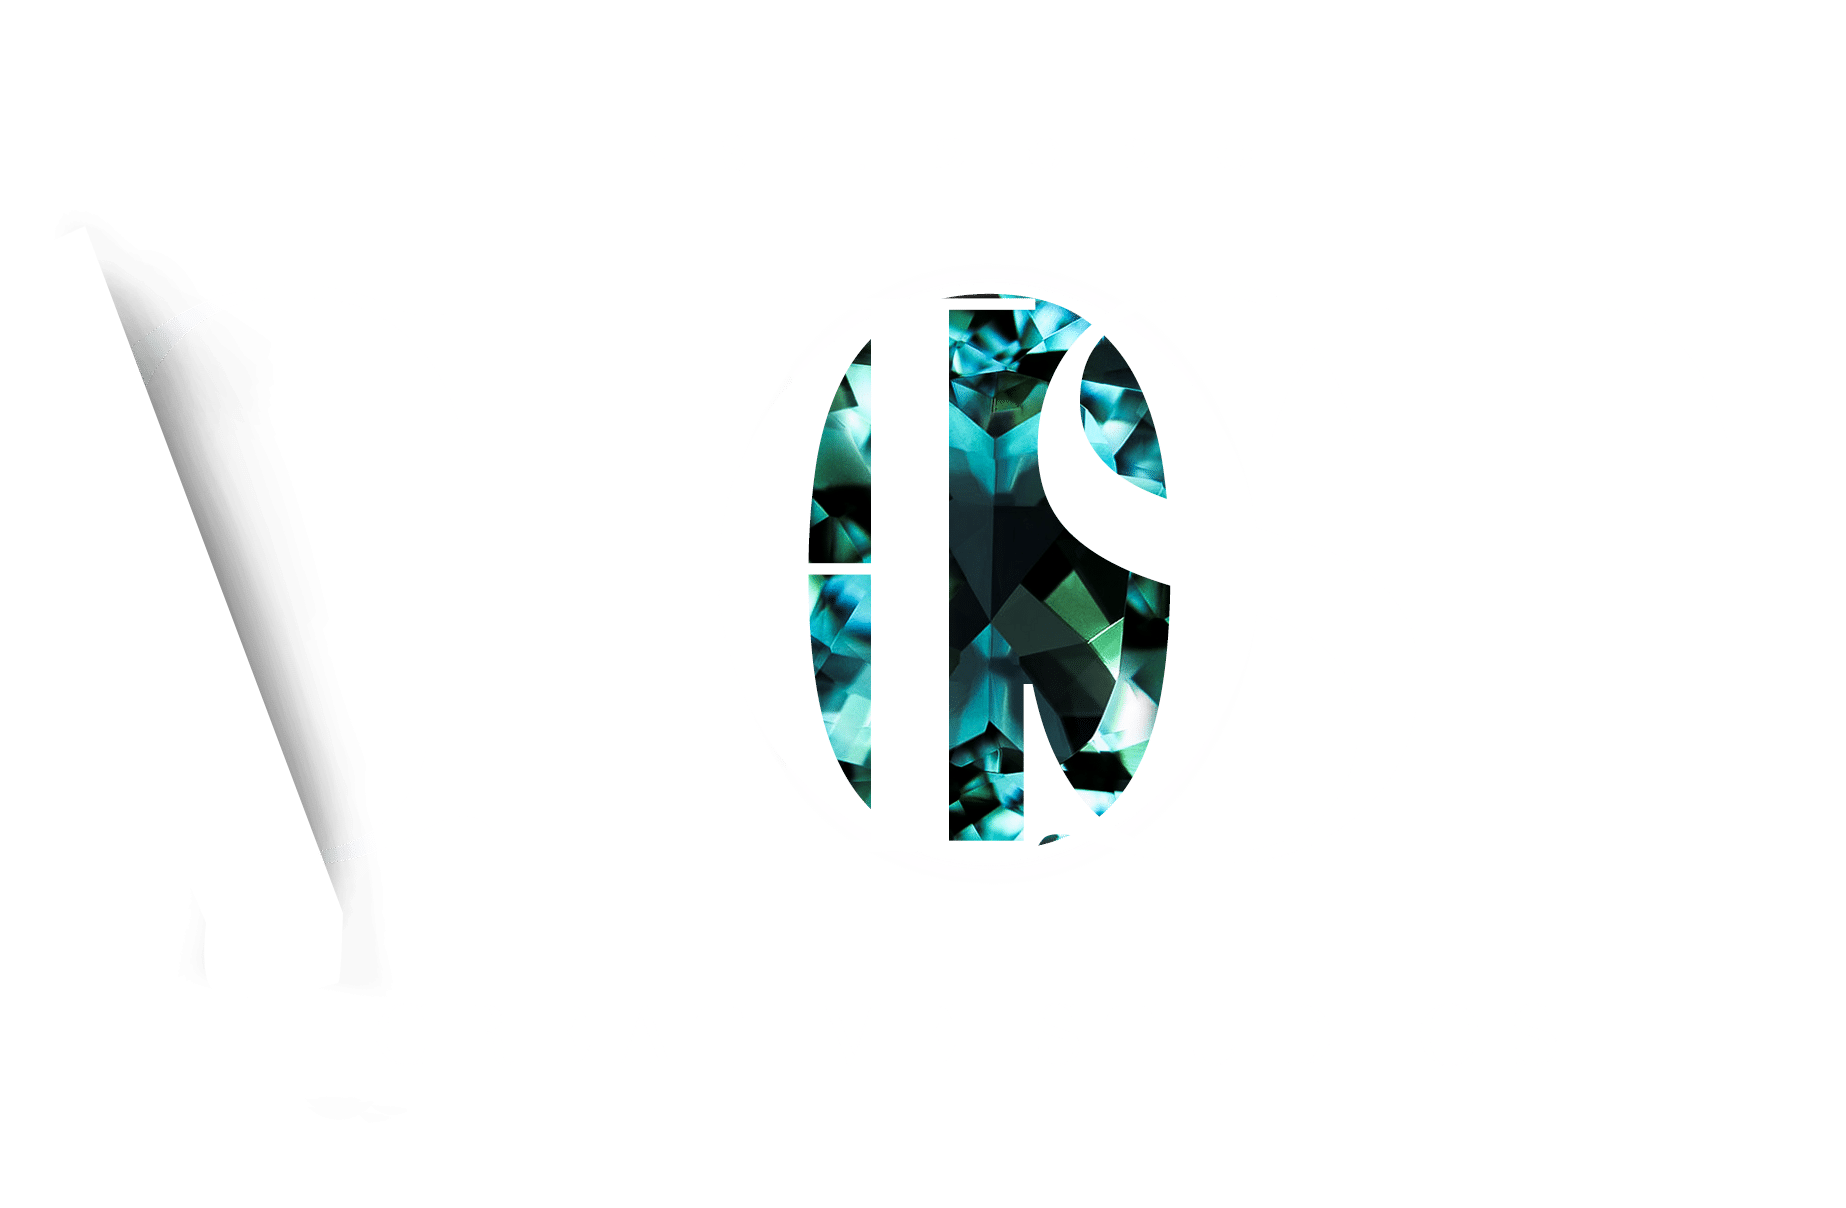 GHOST Creative Studio